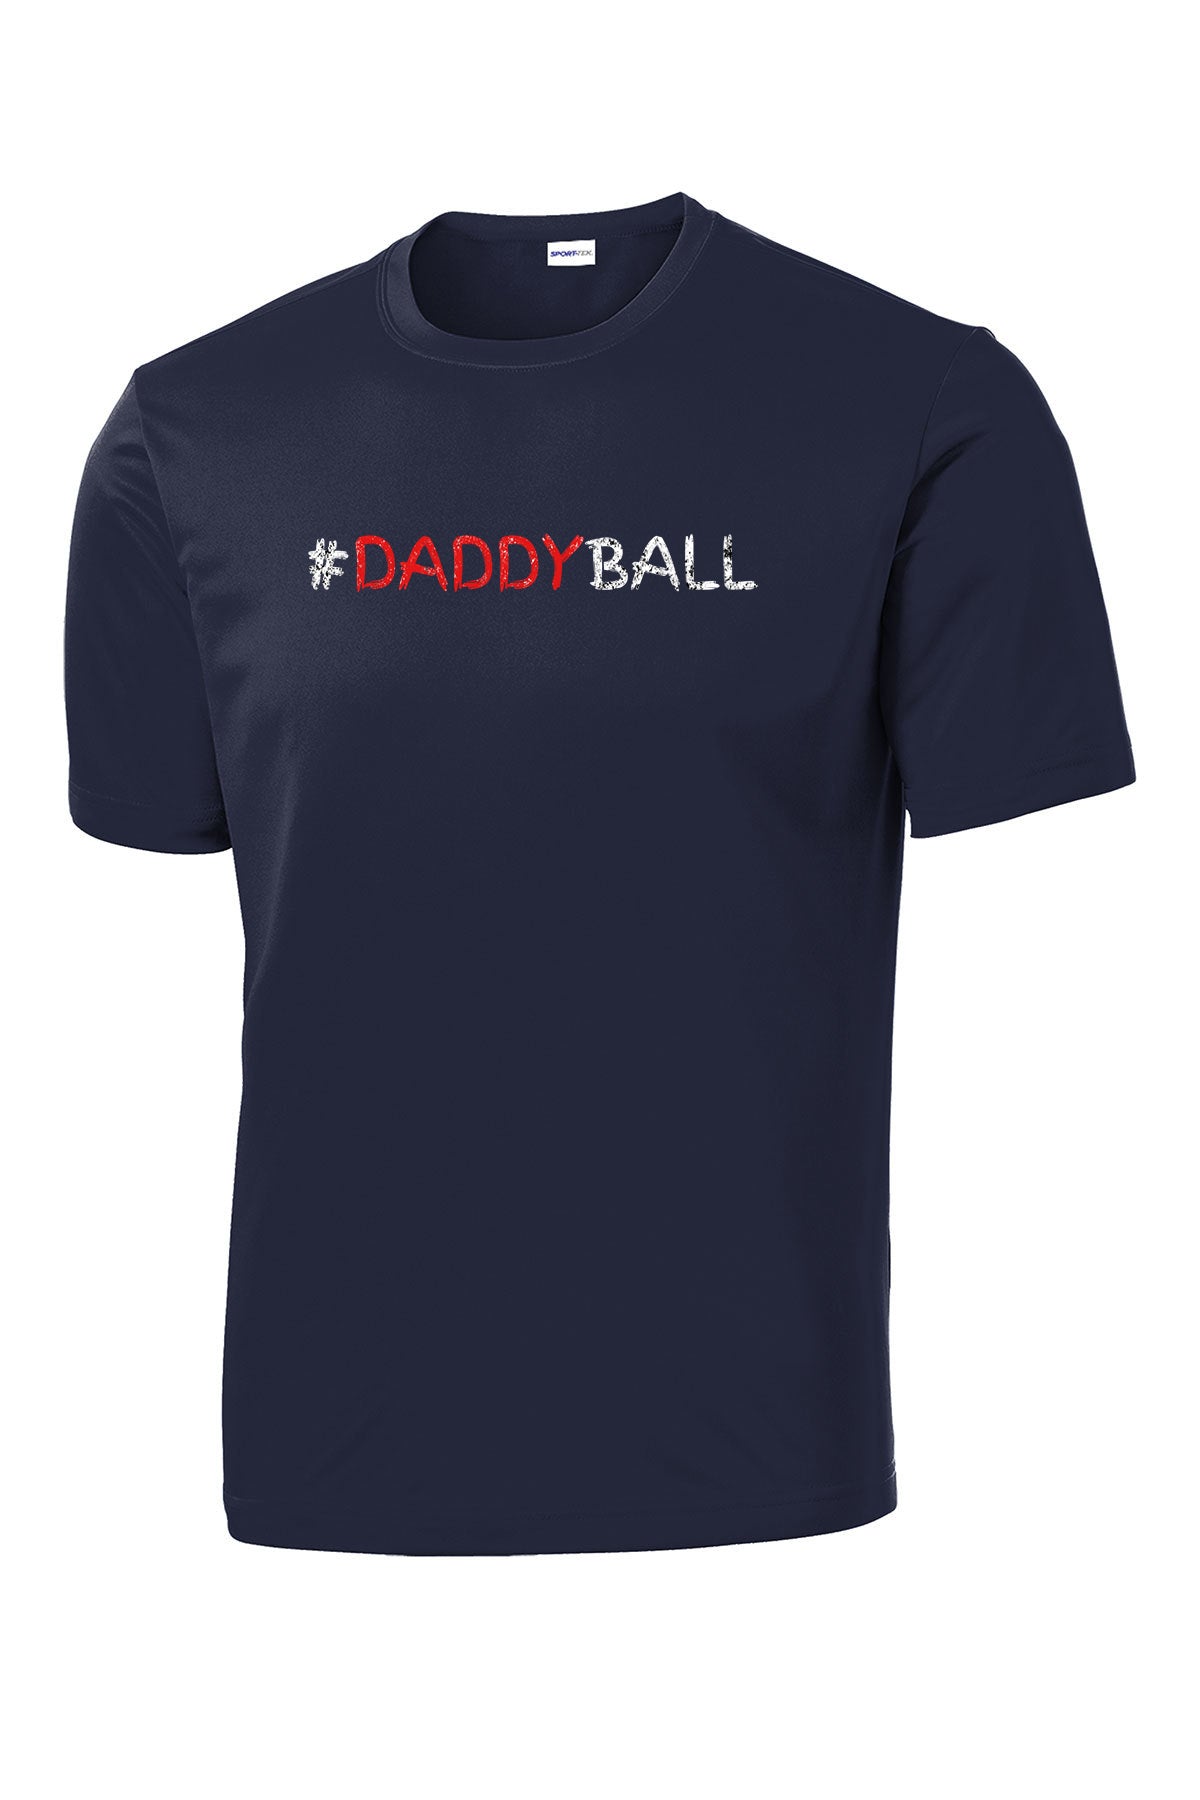 #DaddyBall - Dri Fit Tee